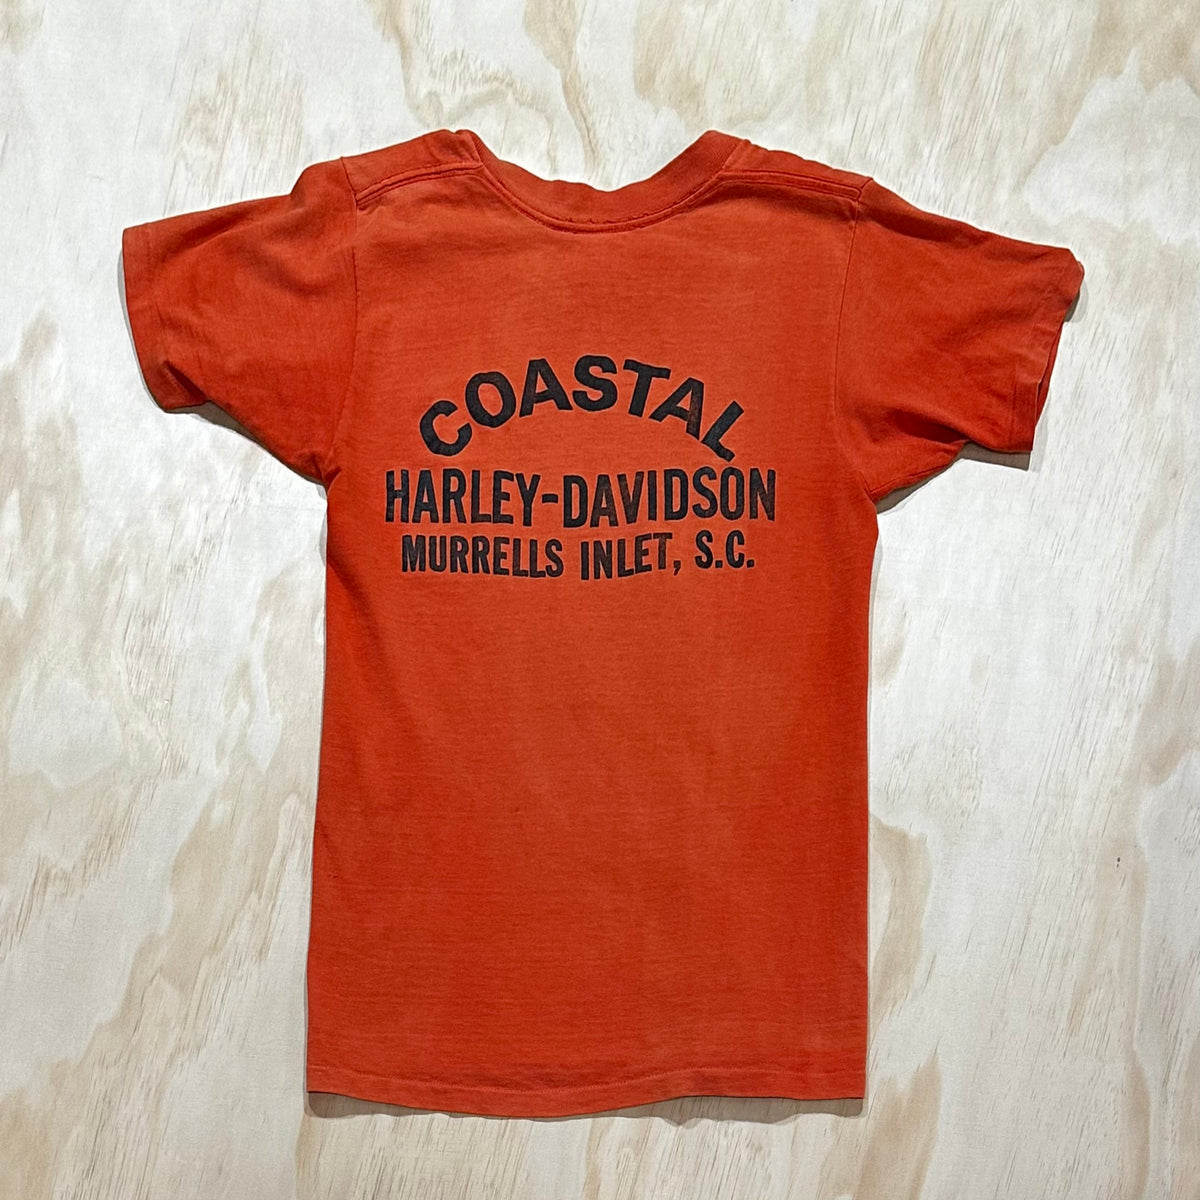 Vintage 80s Harley Davidson Coastal Tee • Murrells Inlet, S.C • Motorcycles  T-Shirt